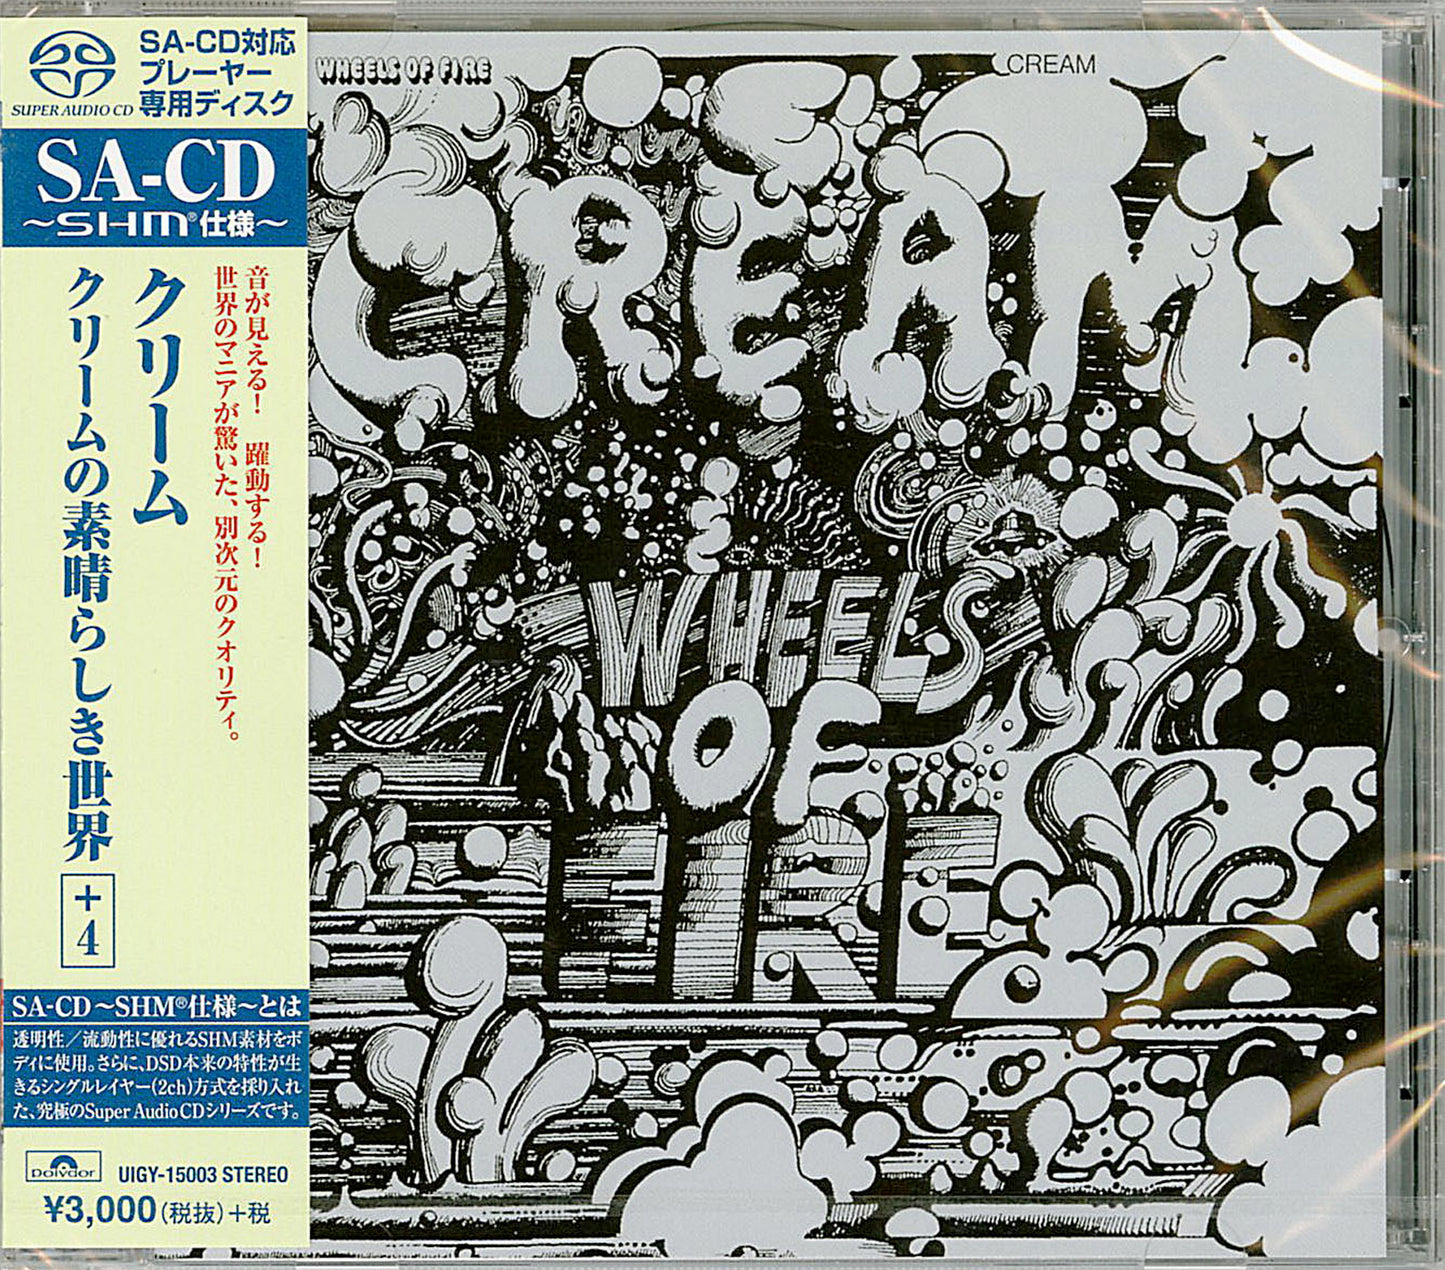 Cream - Wheels Of Fire - Japan  SHM-SACD Bonus Track